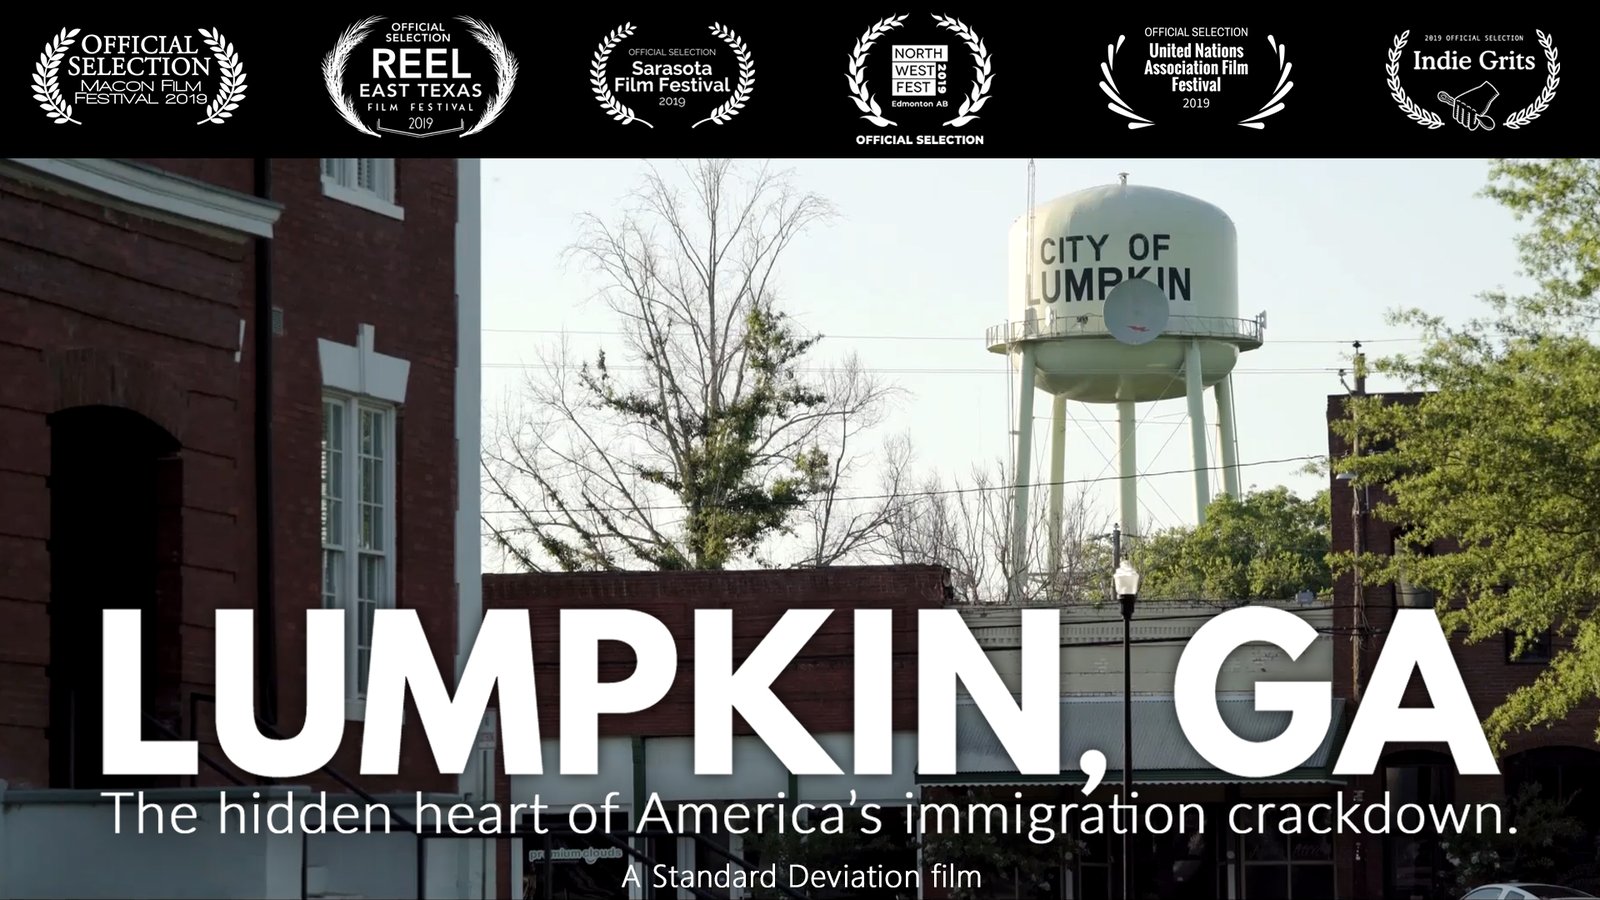 Lumpkin, GA: The Hidden Heart of the American Immigration Crackdown